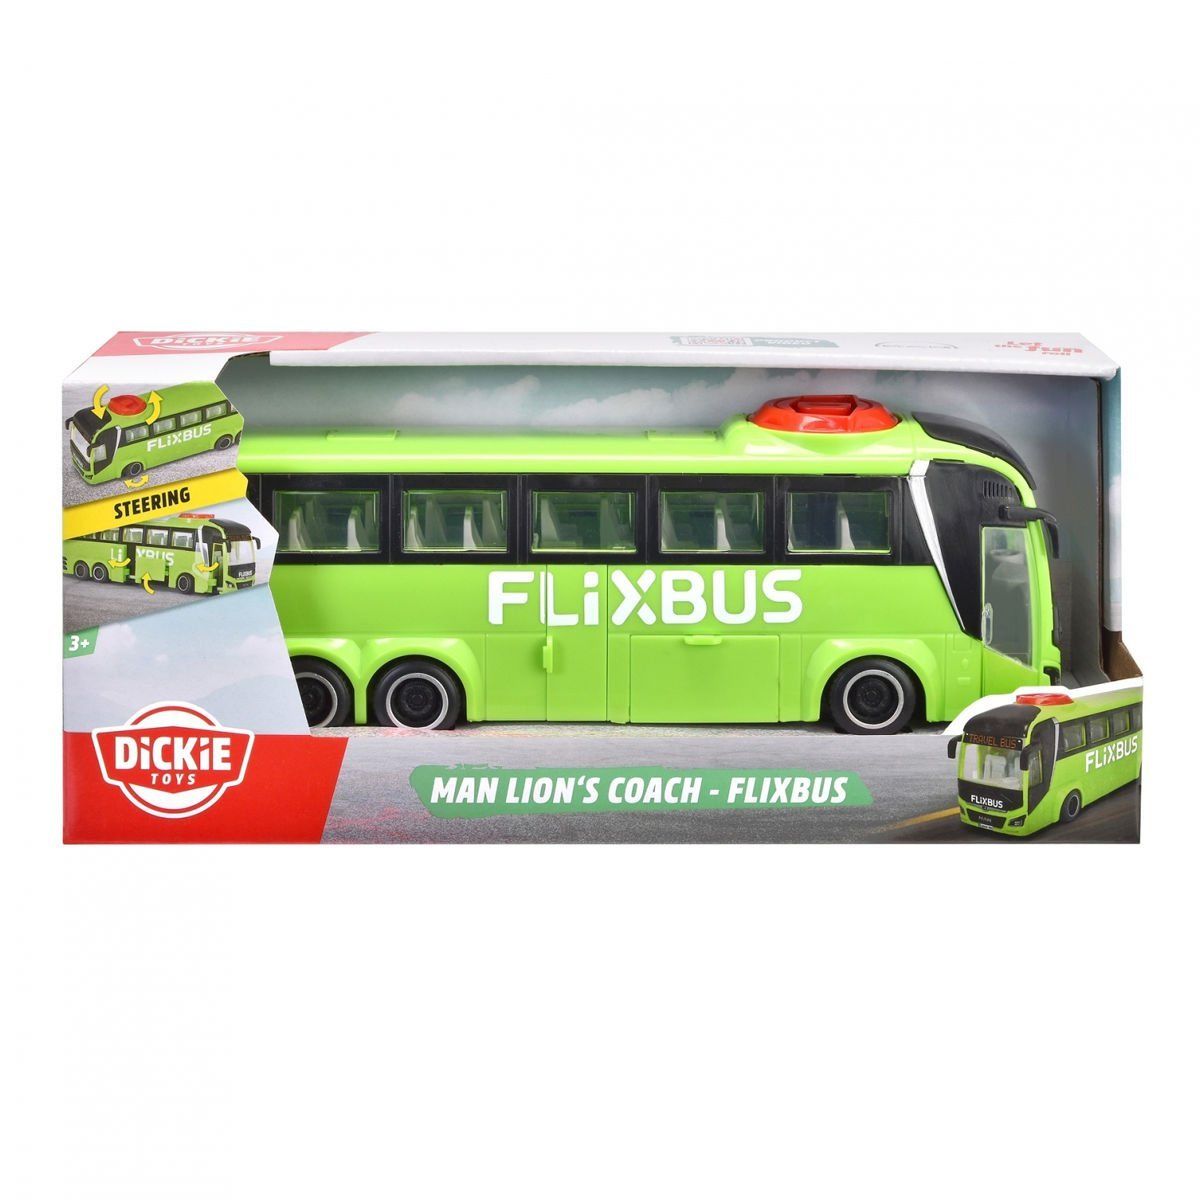 203744015 MAN Lions Coach Flixbus -Dickie